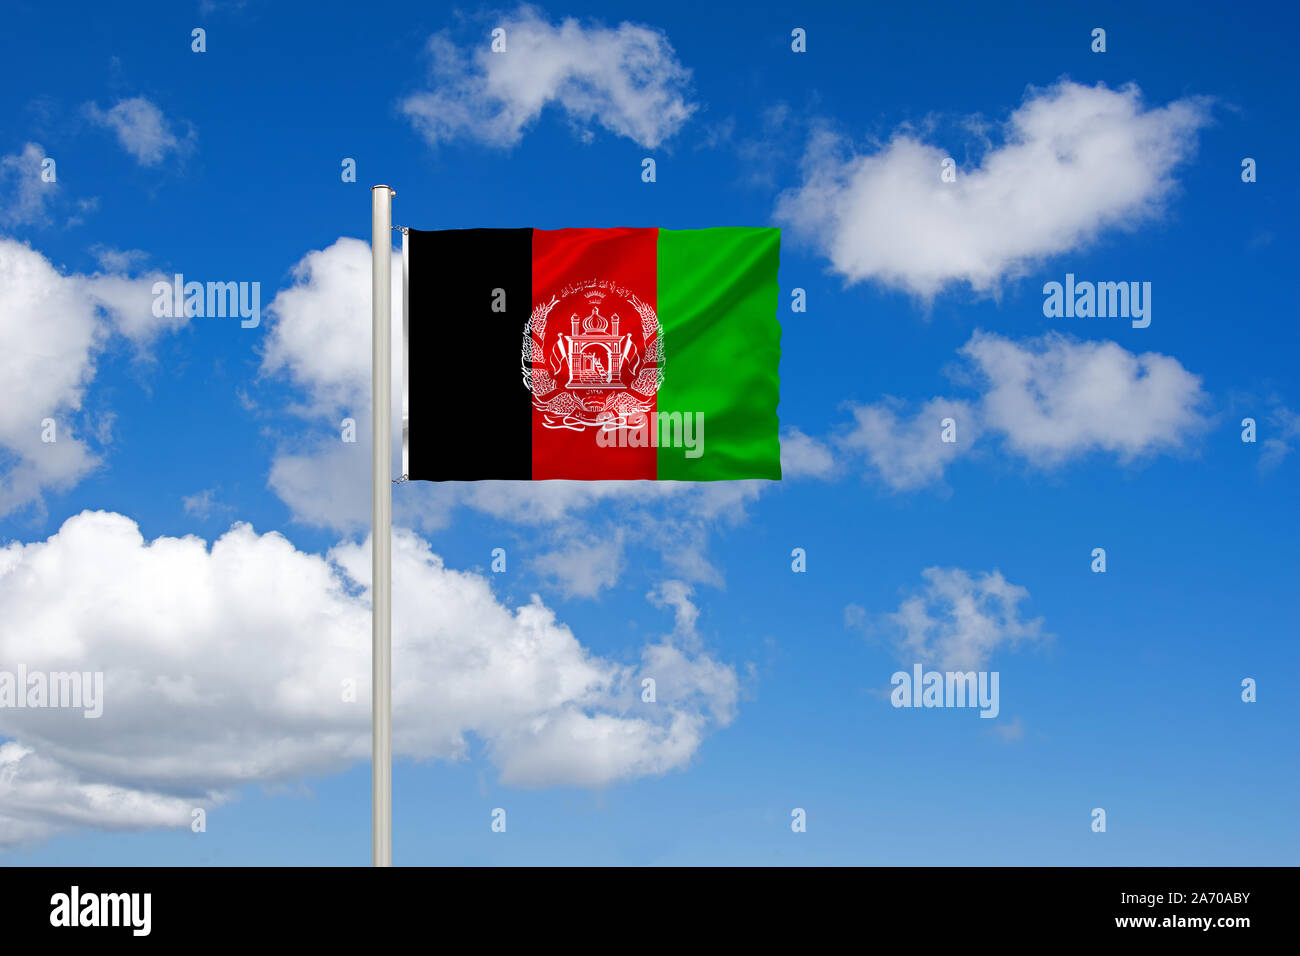 https://c8.alamy.com/comp/2A70ABY/afghanistan-taliban-binnenstaat-sdostasien-flagge-nationalflagge-fahne-nationalfahne-cumulus-wolken-vor-blauen-himmel-2A70ABY.jpg